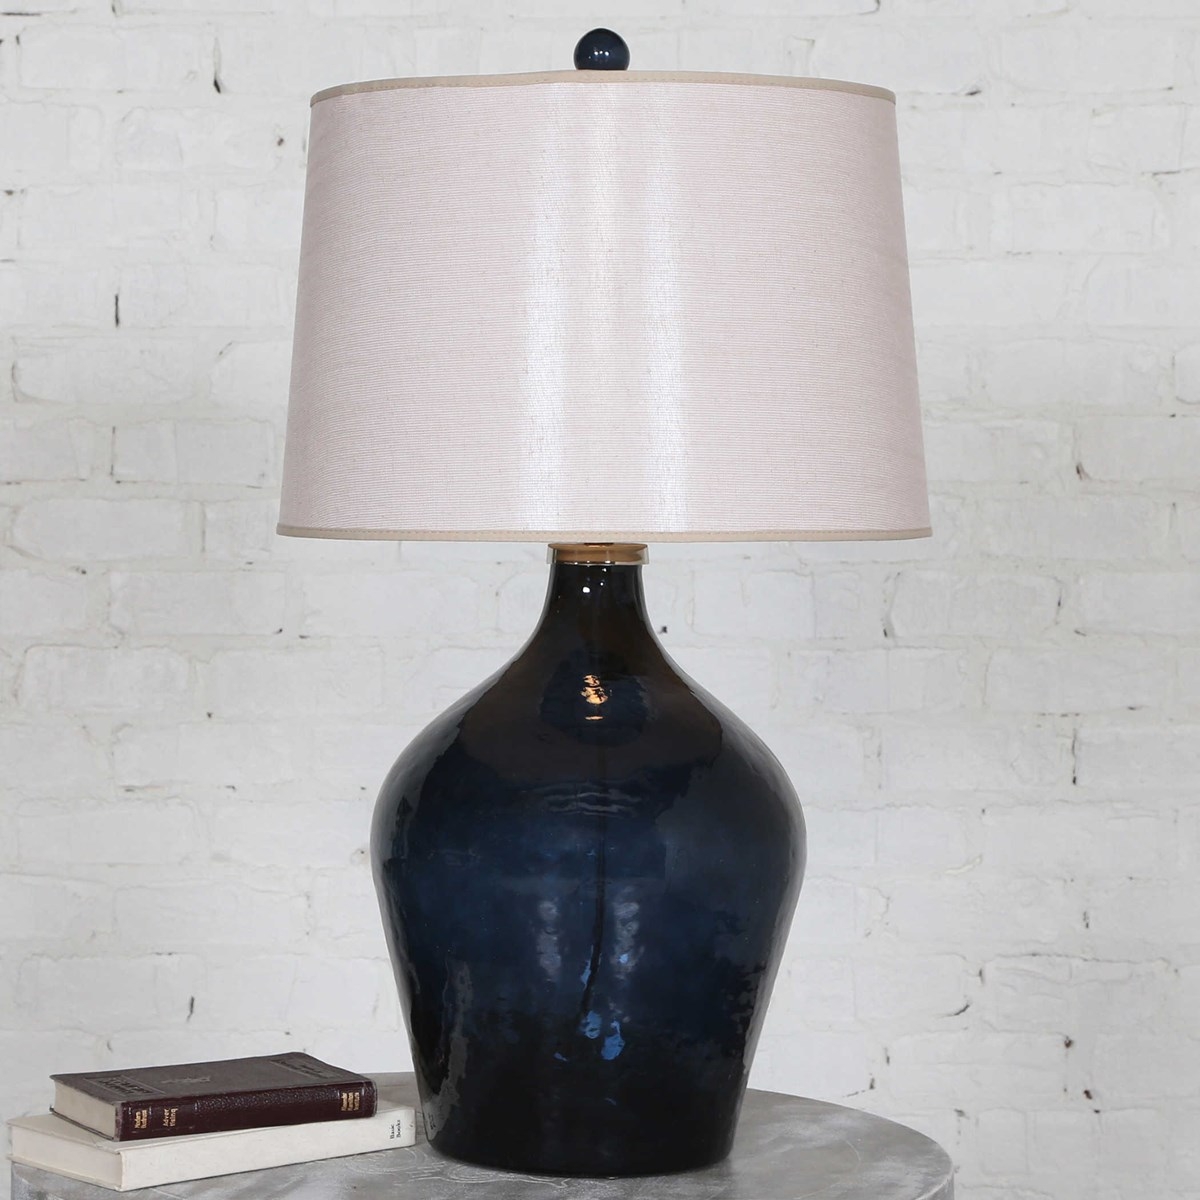 LAMONE TABLE LAMP - Image 1